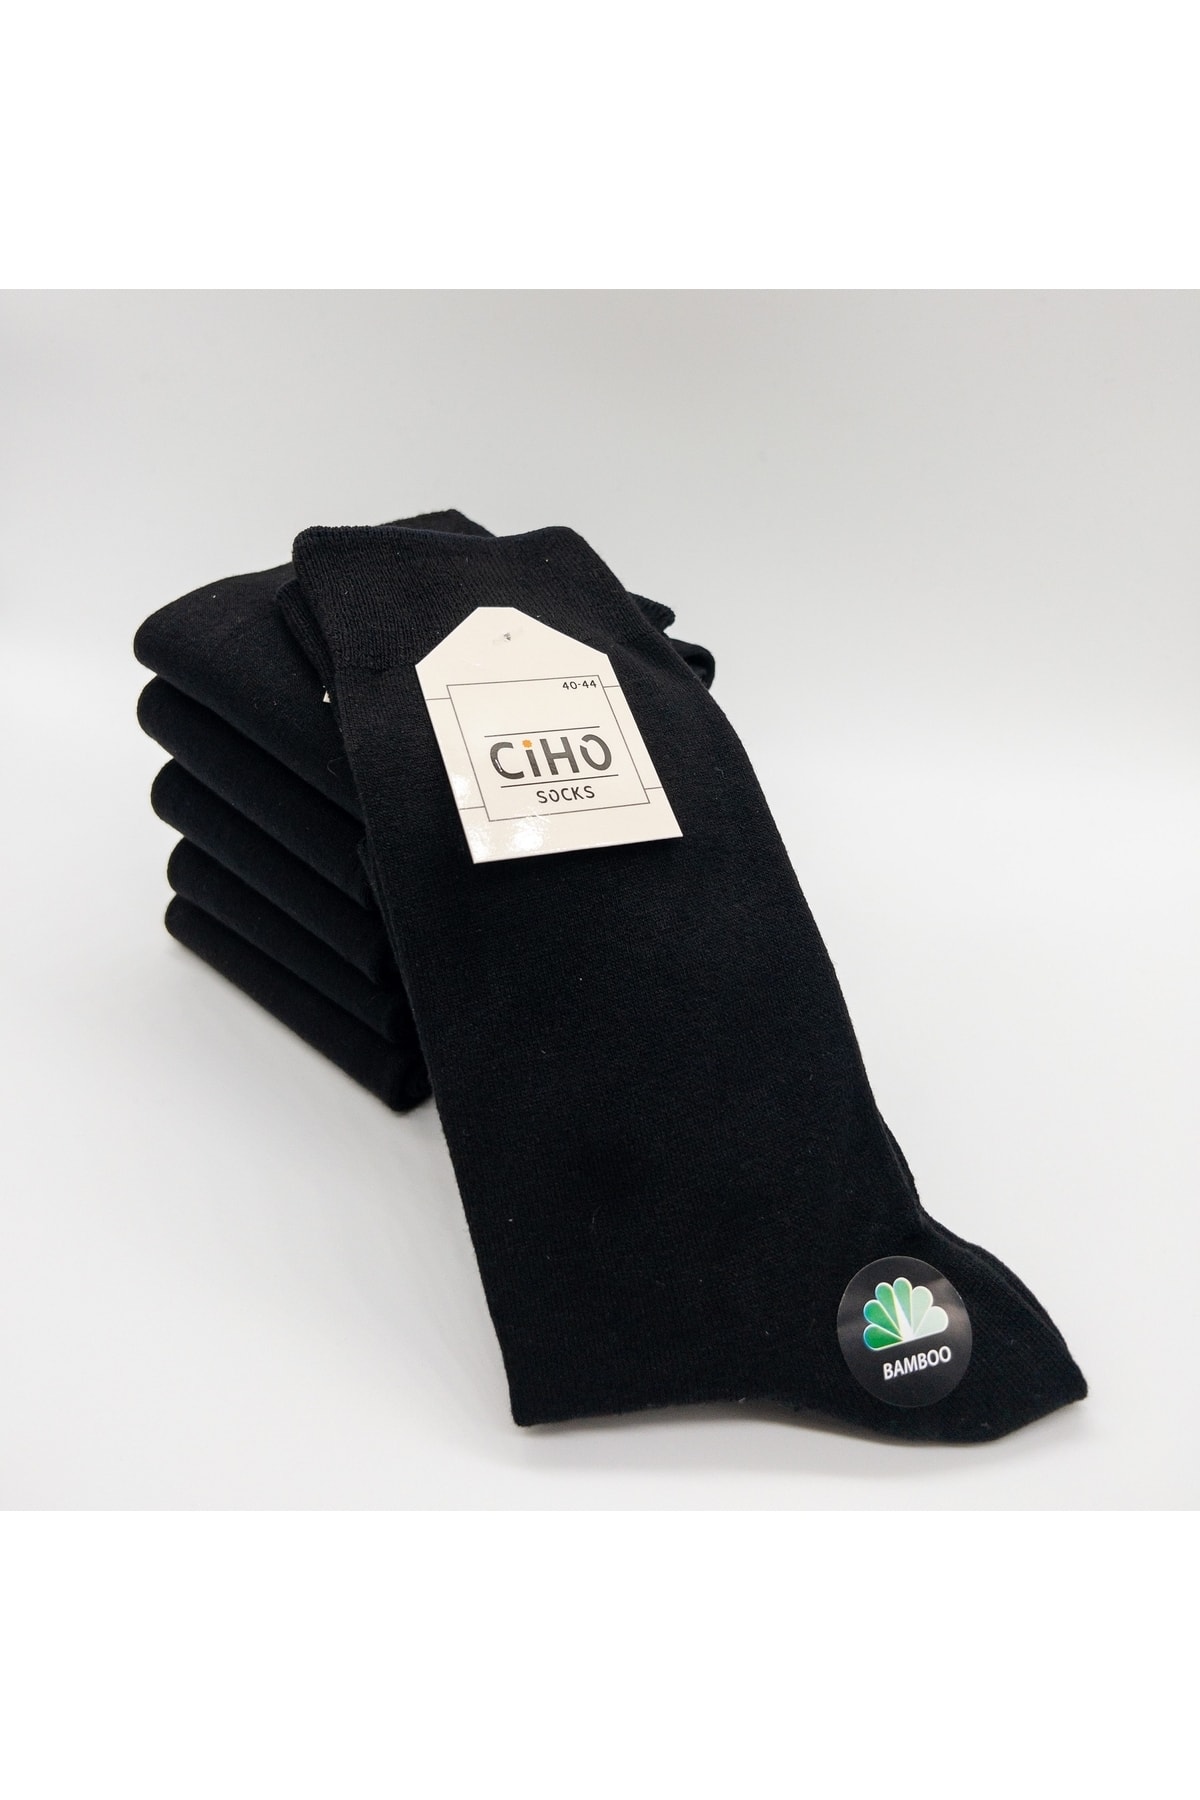 CİHO Socks Premium 6 Çift Bambu Dikişsiz Siyah Erkek Soket Çorap